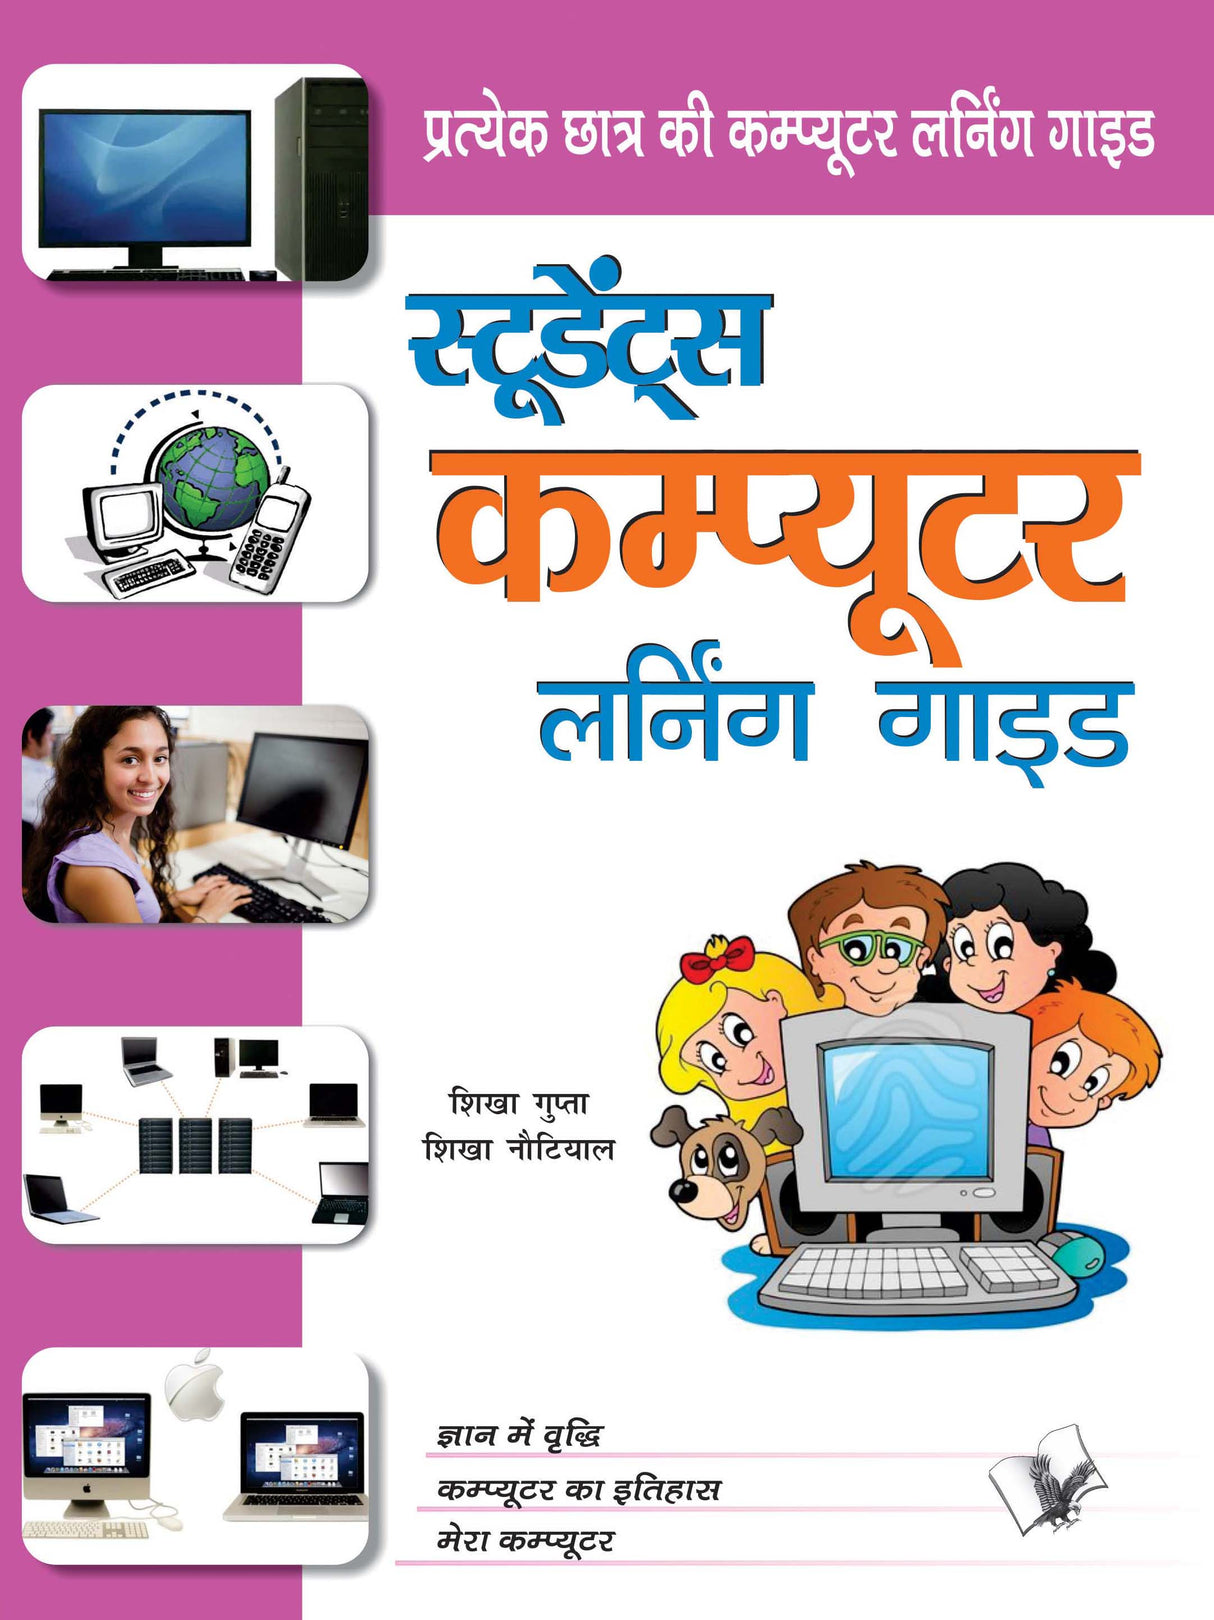 Students Computer Learning Guide: Pratyek Chatr Ki Computer Learning Guide